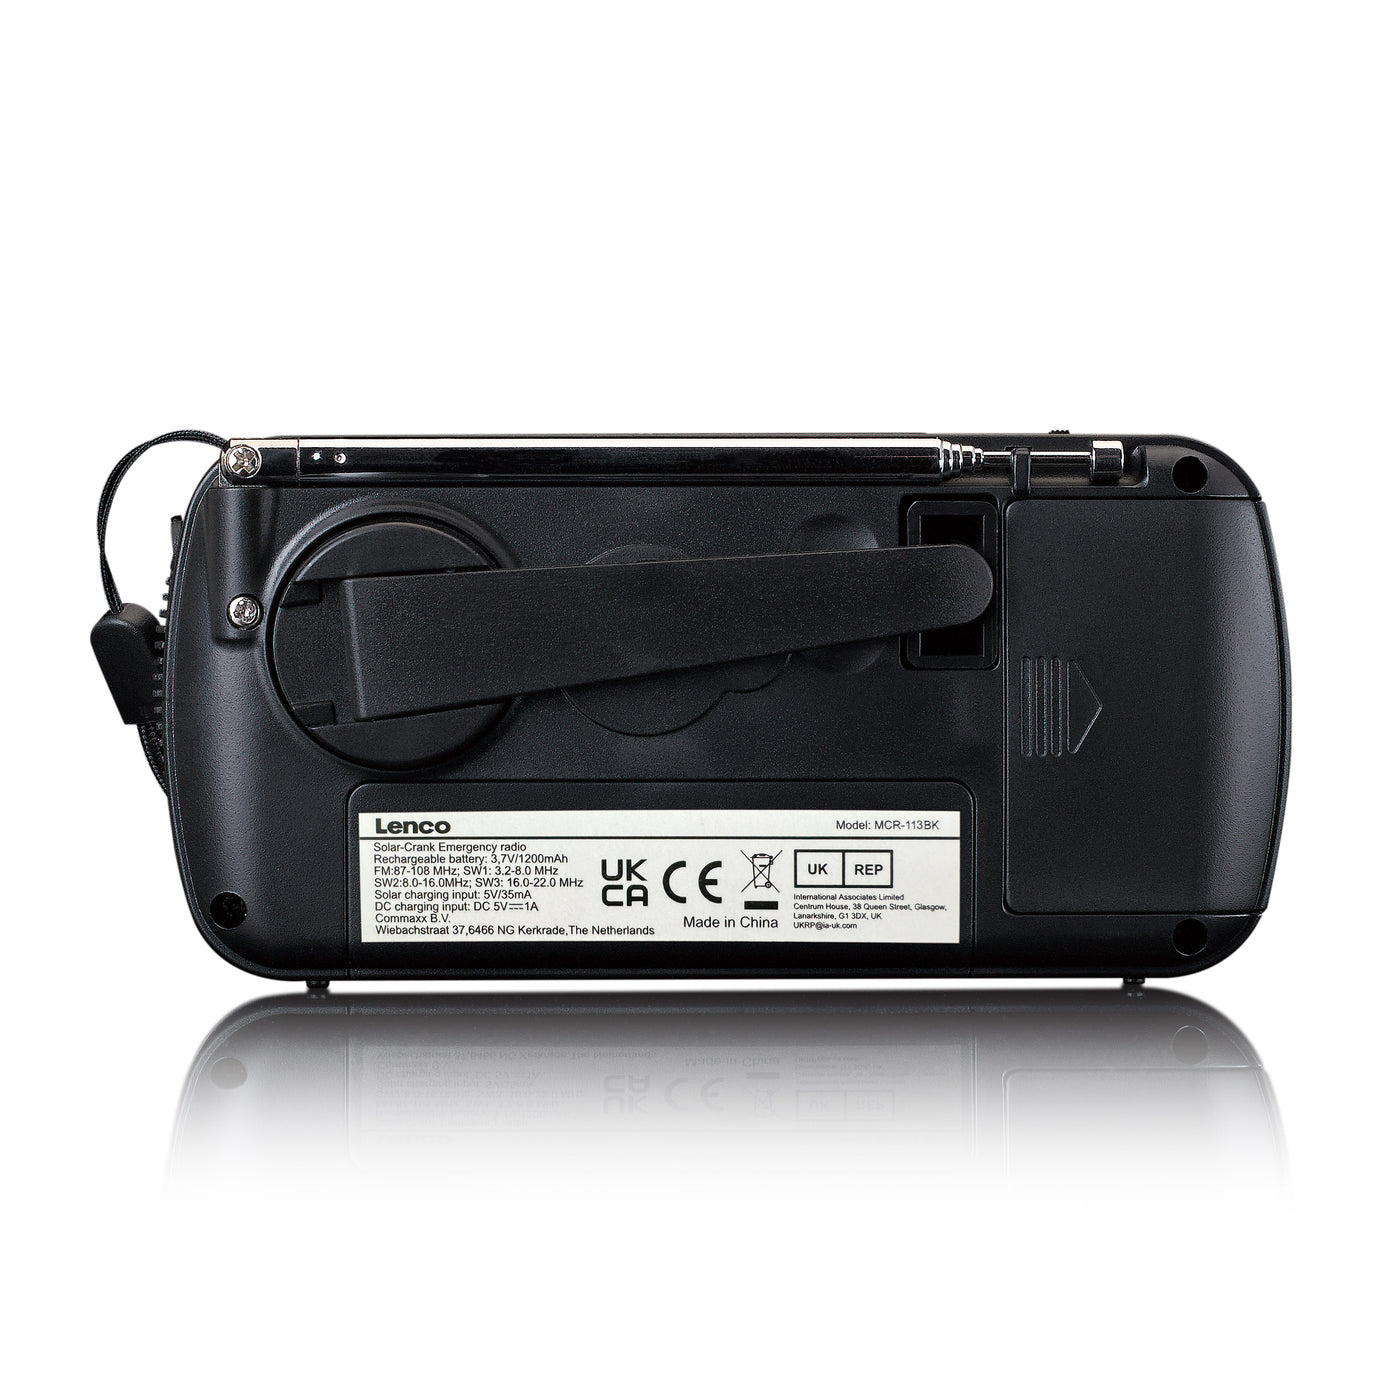 LENCO MCR-112BK - Draagbare opwindbare noodradio, zaklamp en powerbank in één - Zwart